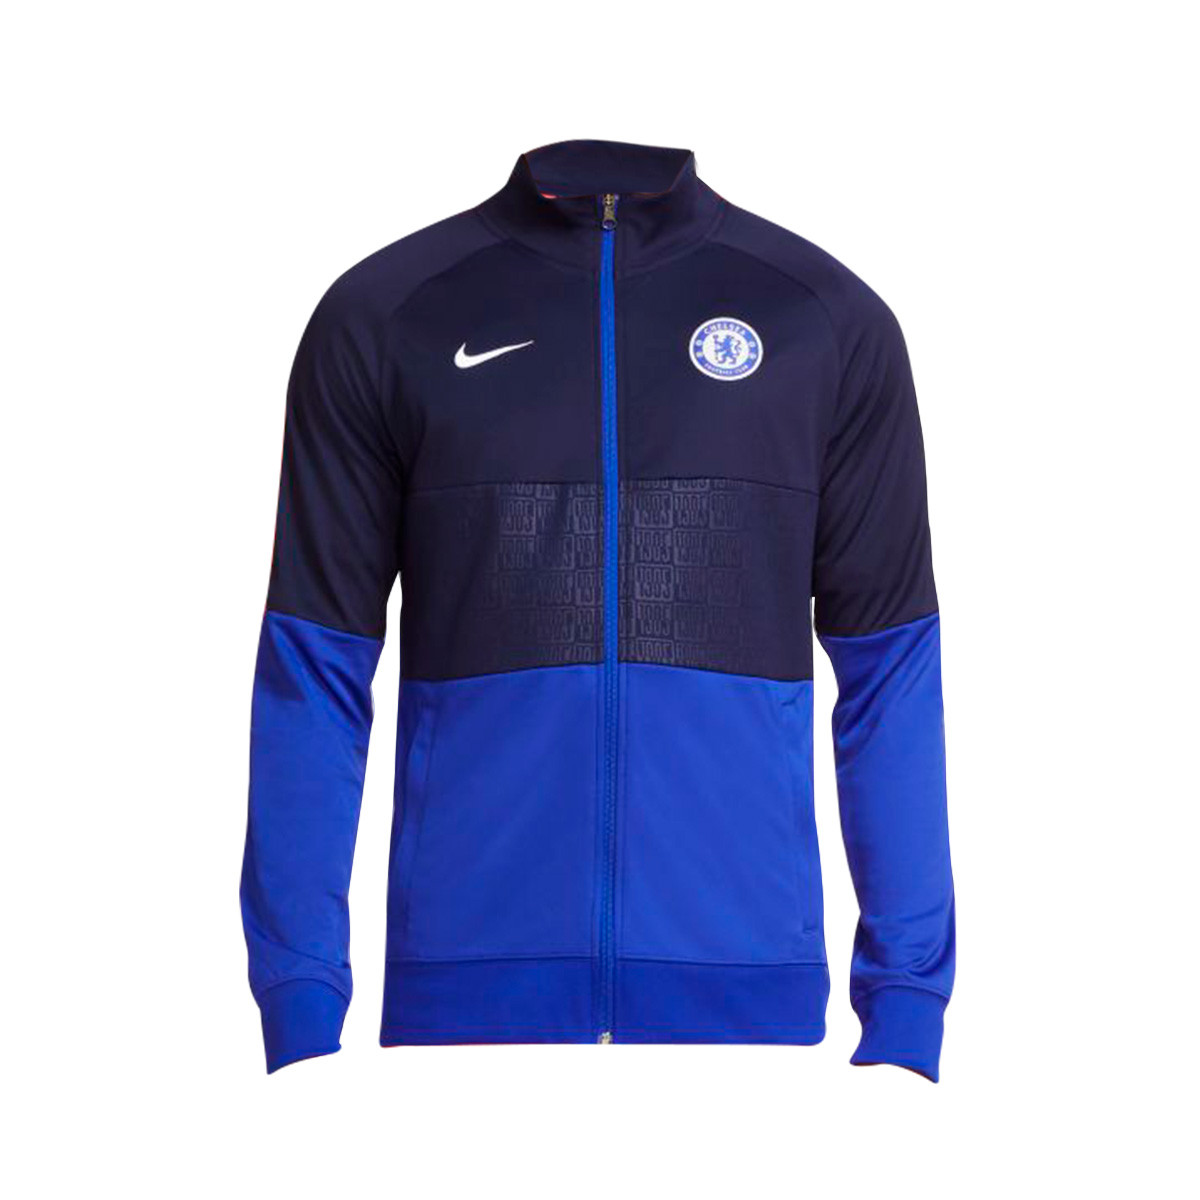 Jacket Nike Chelsea Fc I96 Anthem Cl 21 Blackened Blue Concord Ember Glow White Futbol Emotion